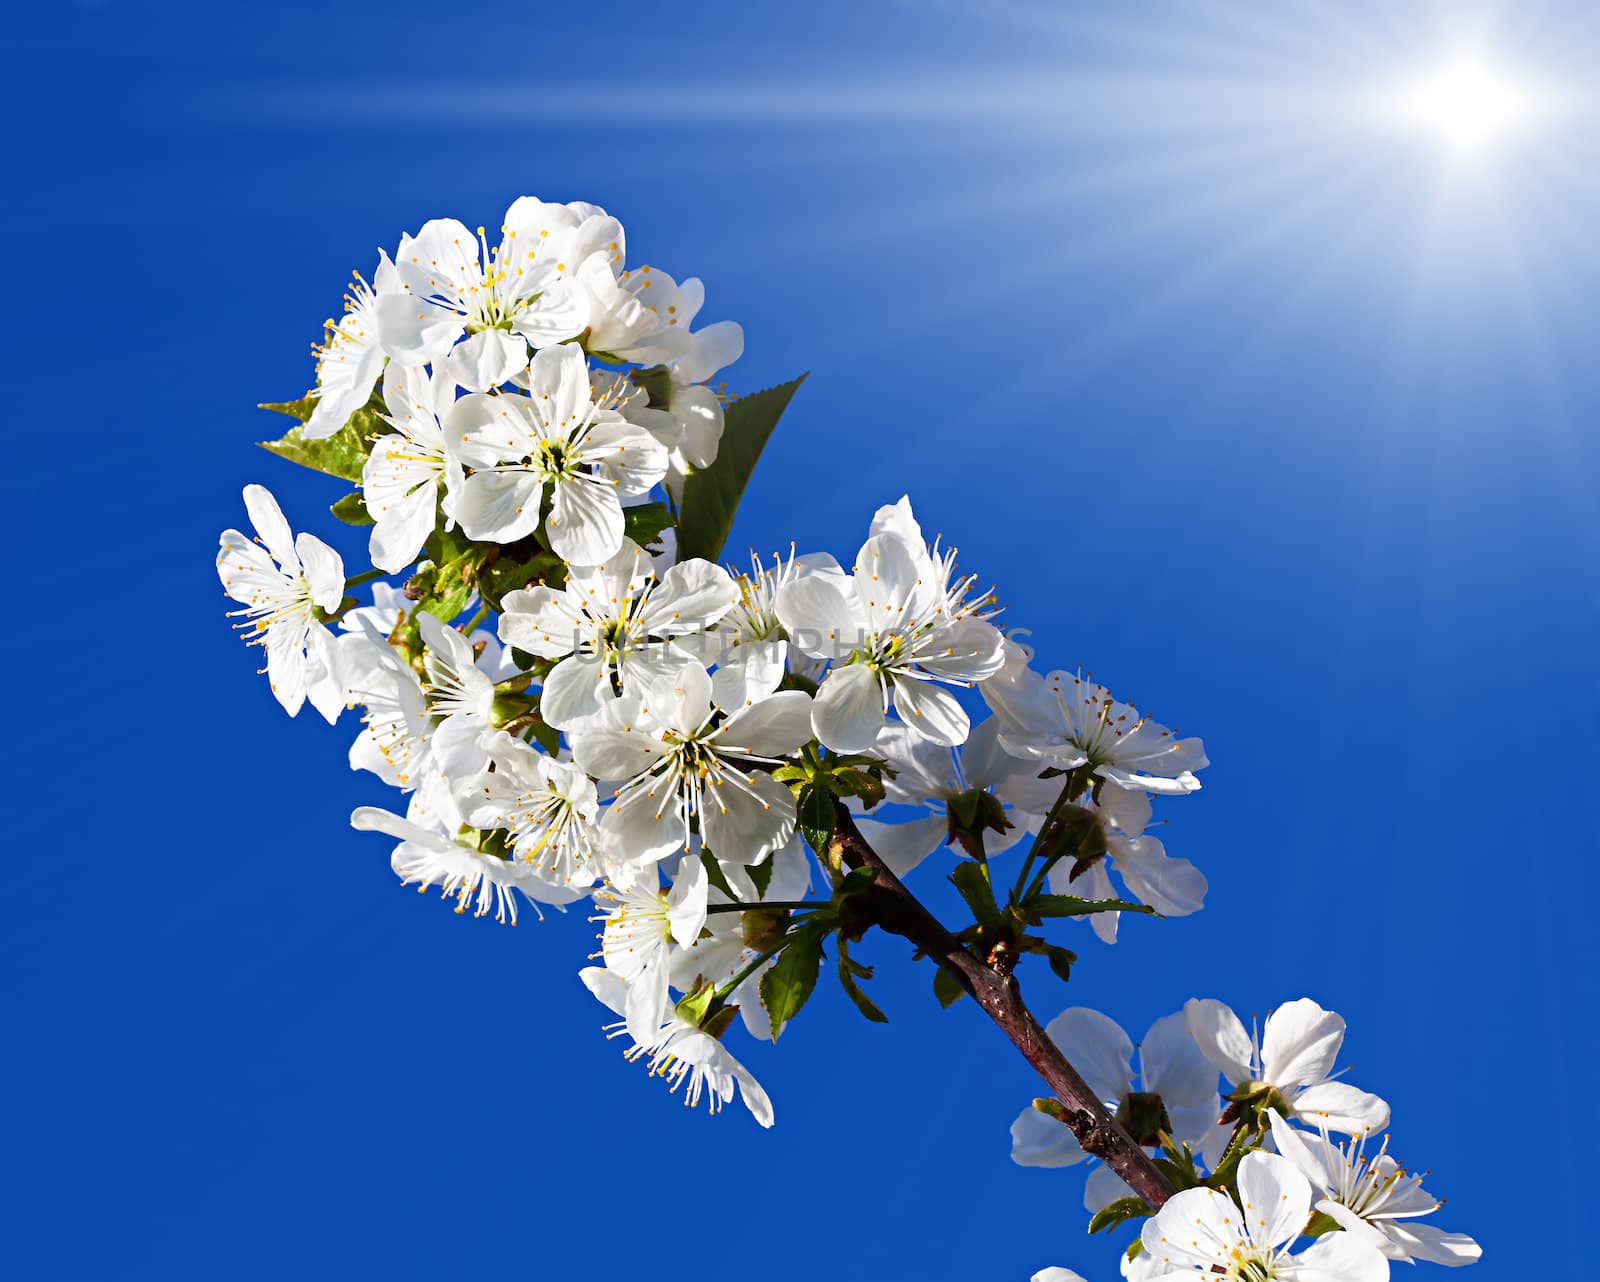 Spring flowers tree in sun light against a blue sky